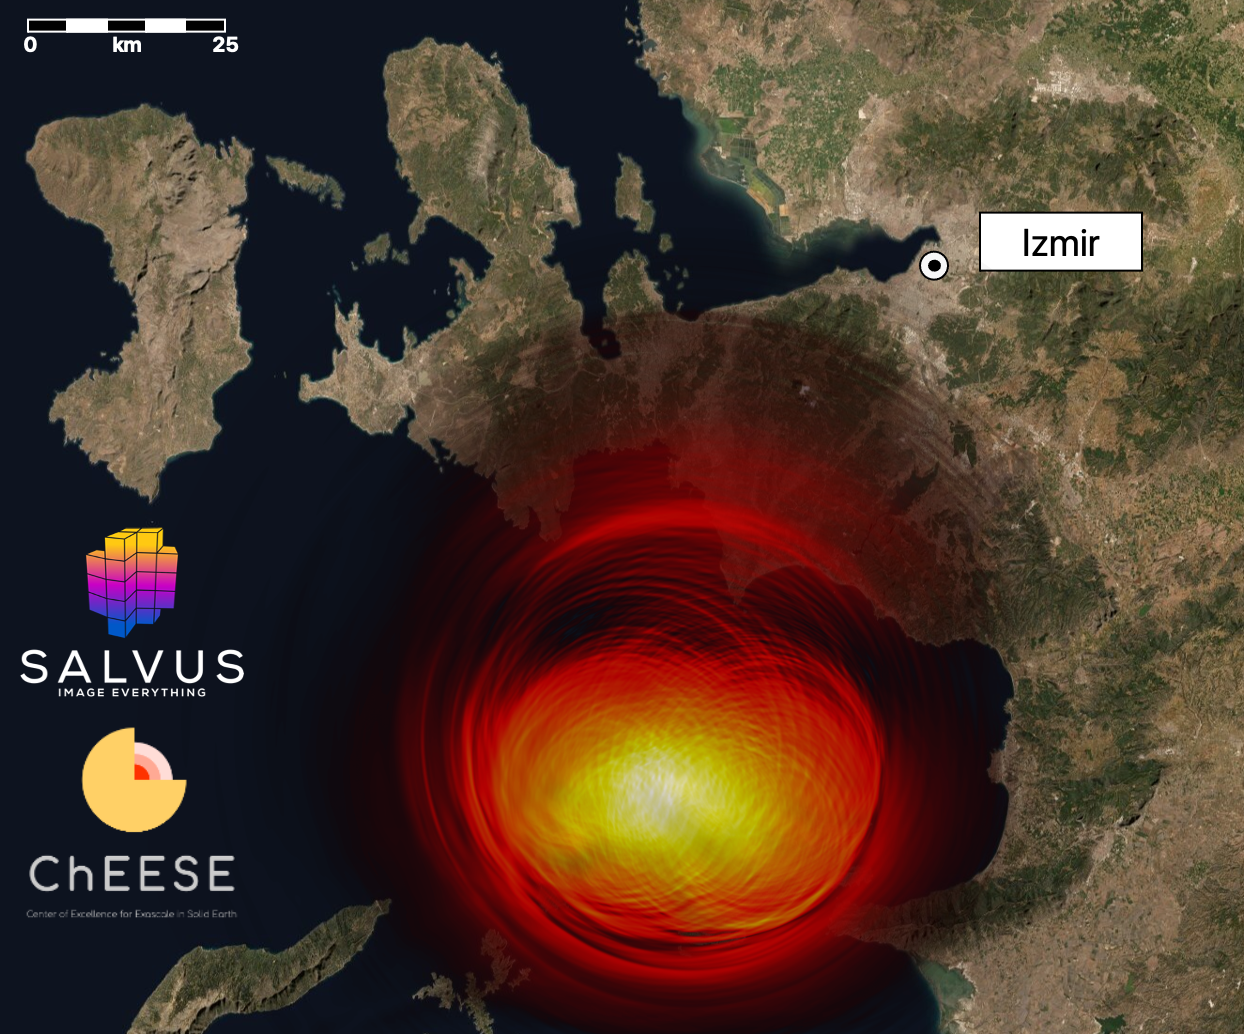 Mw 7 Samos-Izmir earthquake